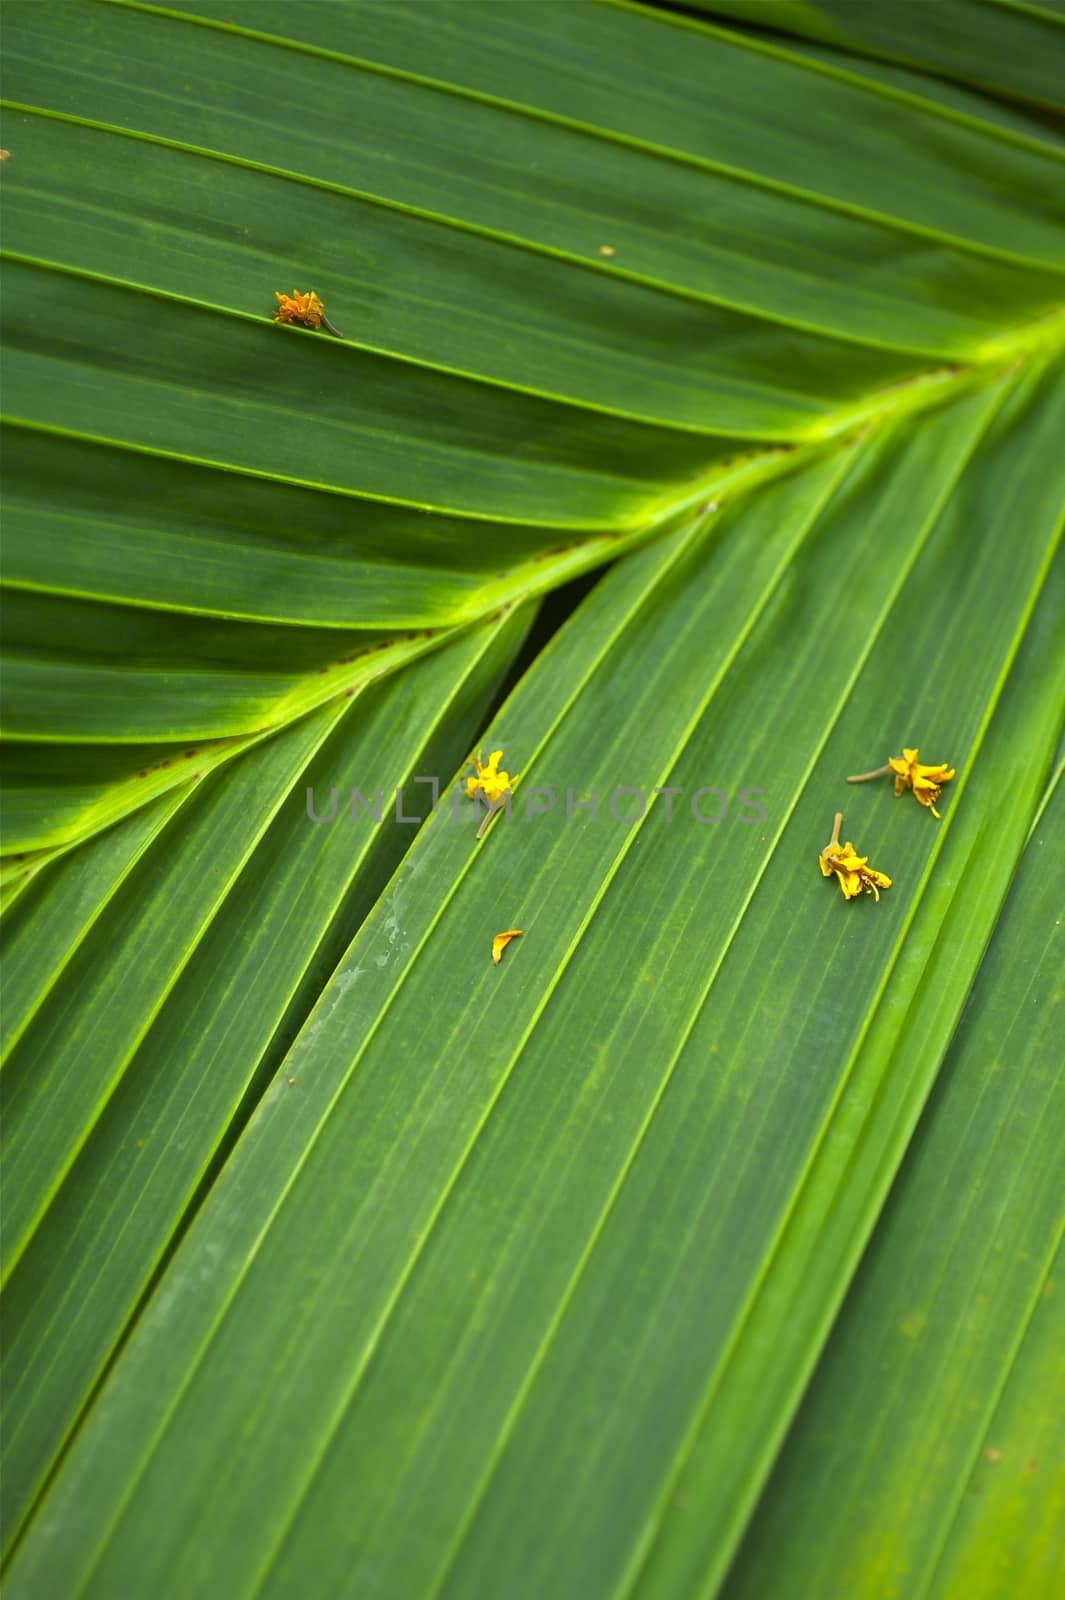 Tropical Palm Leaf by welcomia